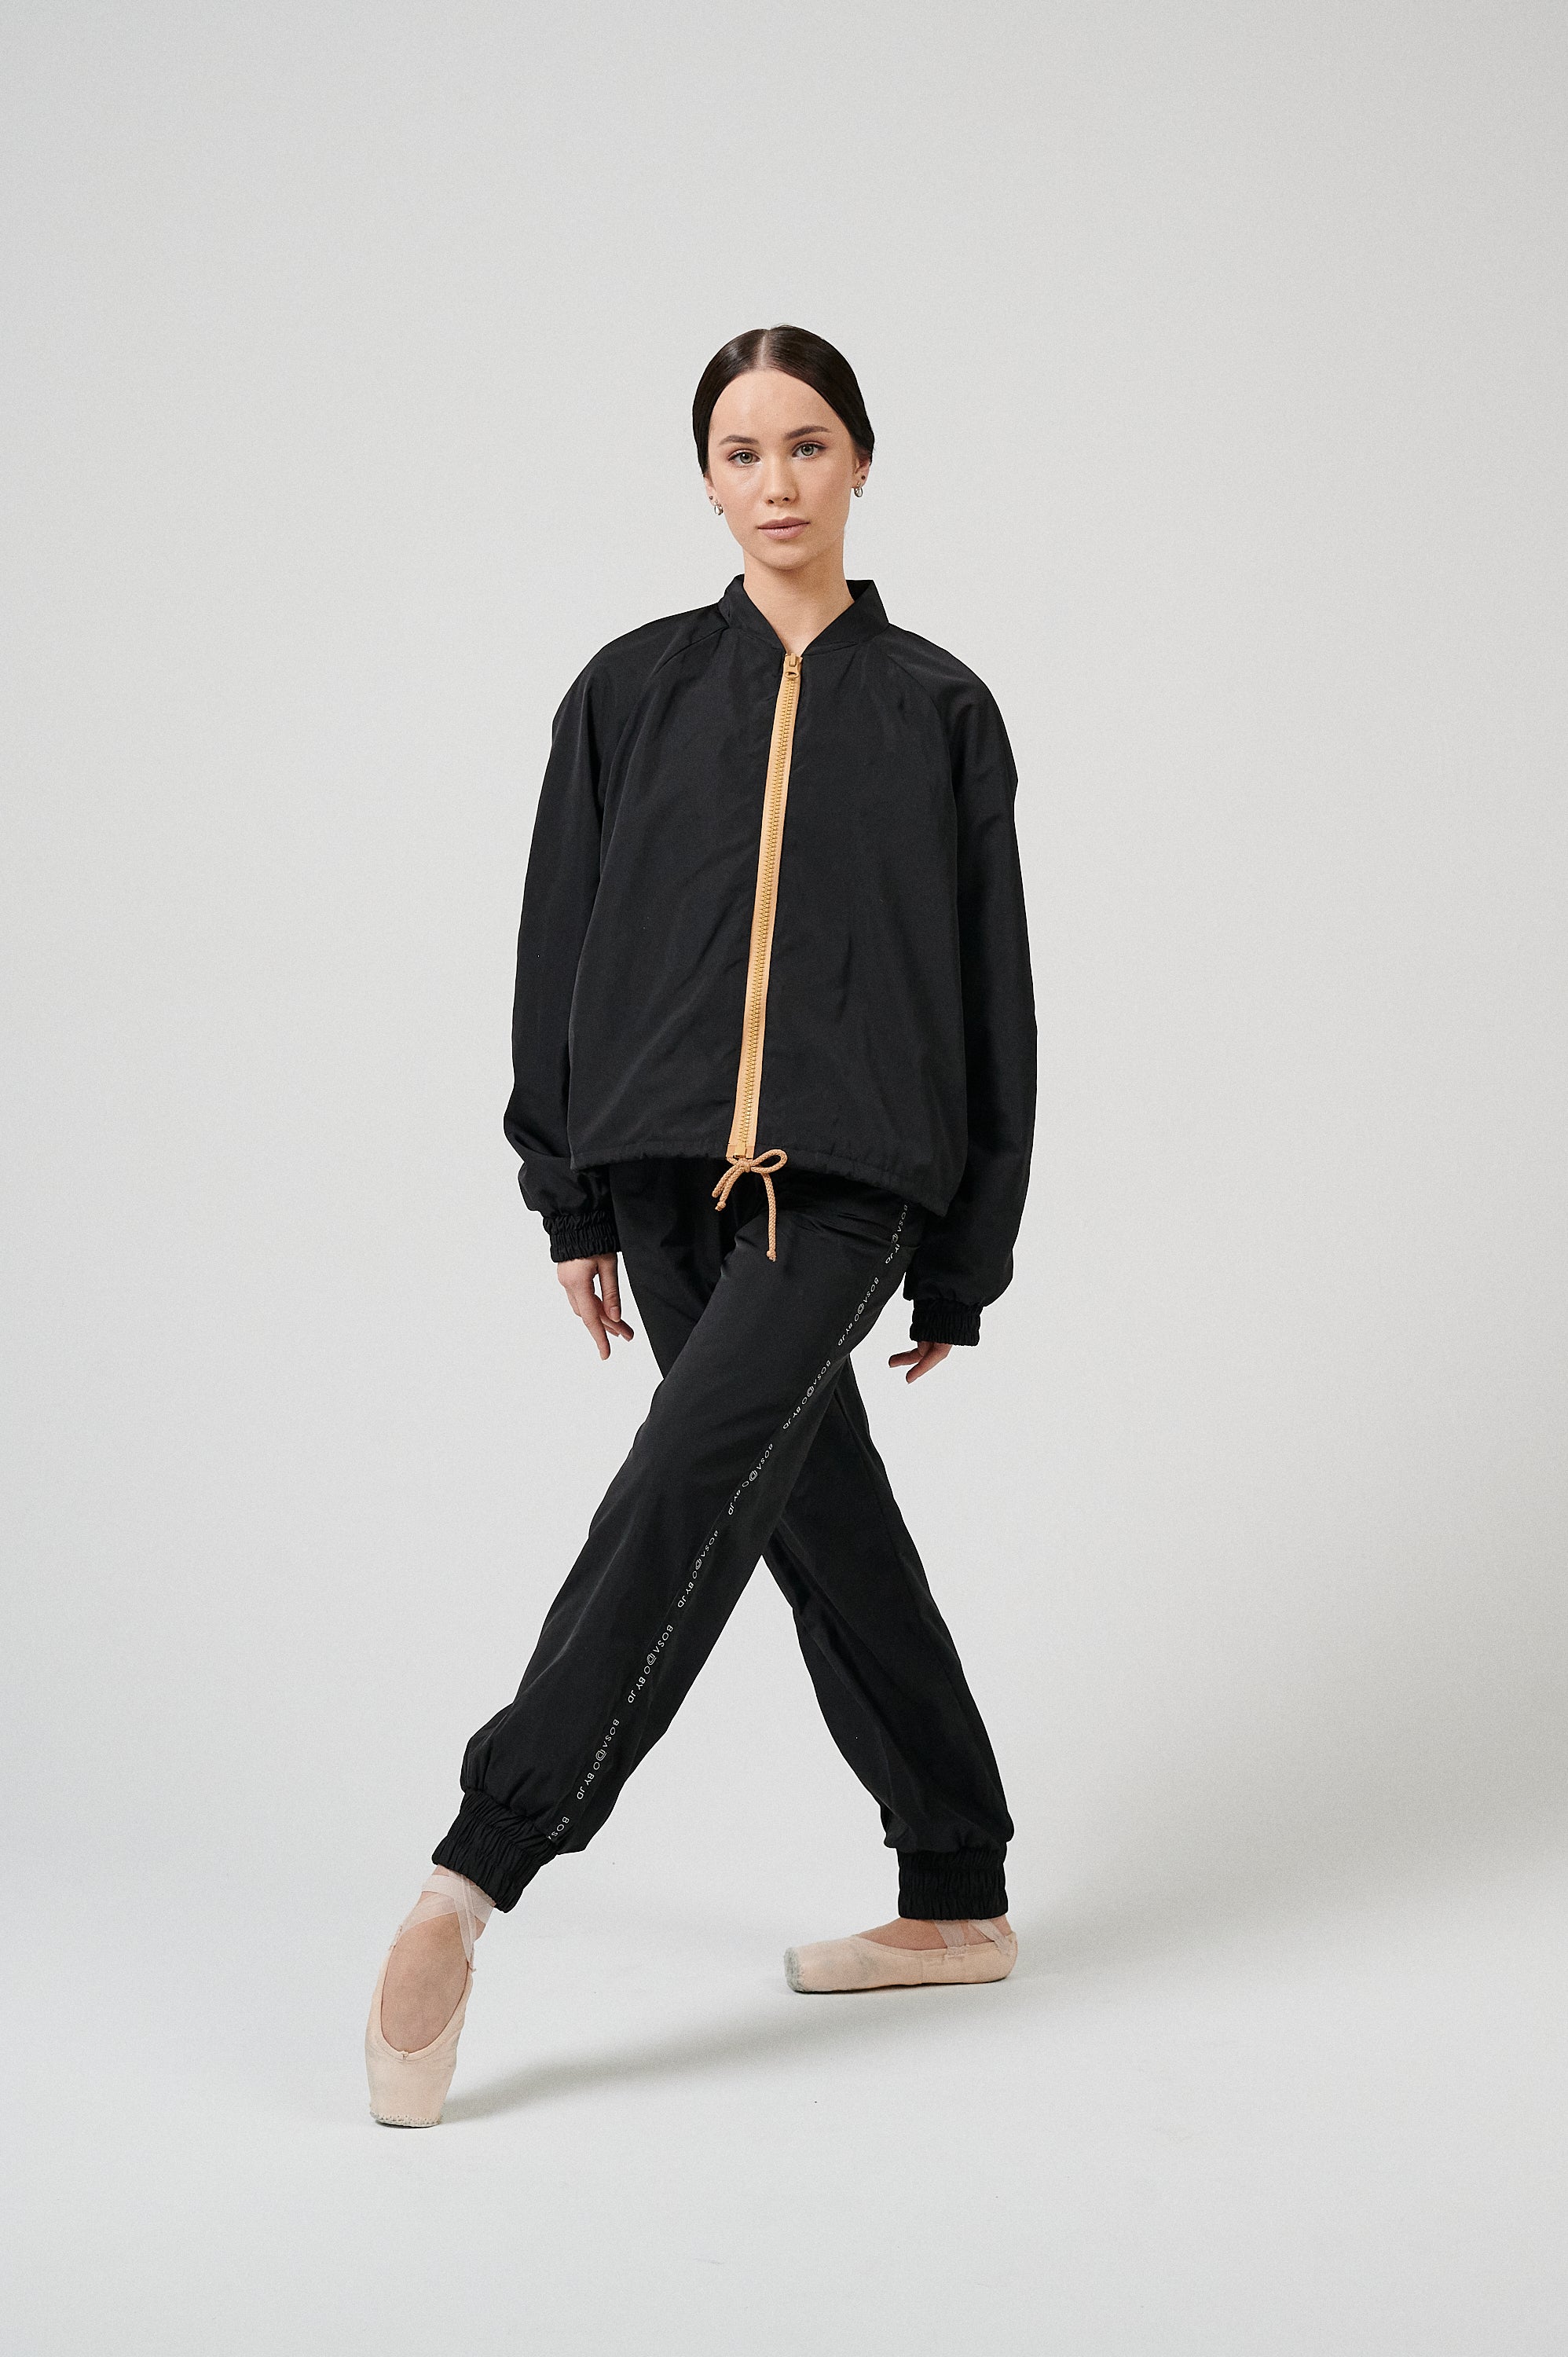 Bosaddo by Jurgita Dronina collection | Black sports suit with pants + shorts